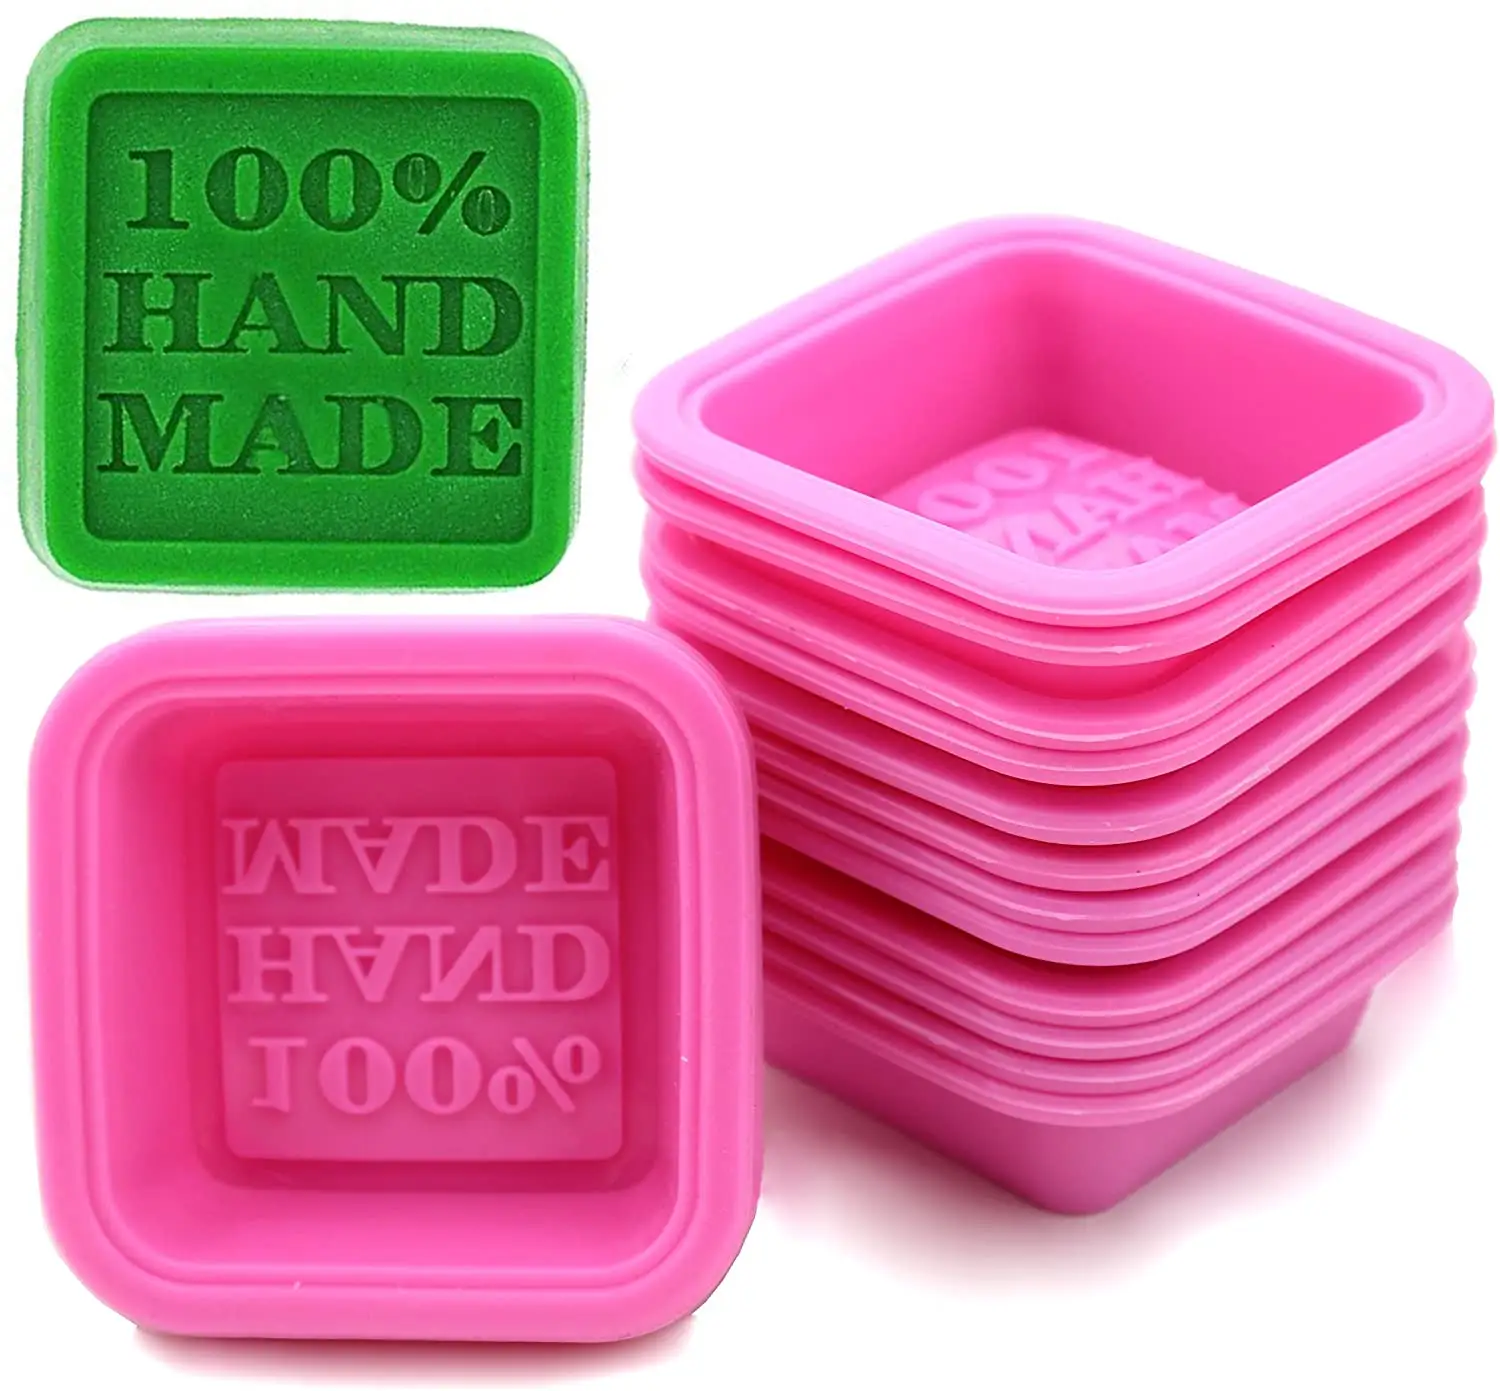 Cetakan sabun buatan tangan DIY, mudah dibersihkan, 100%, cetakan sabun silikon persegi tunggal, alat membuat kue atau sabun